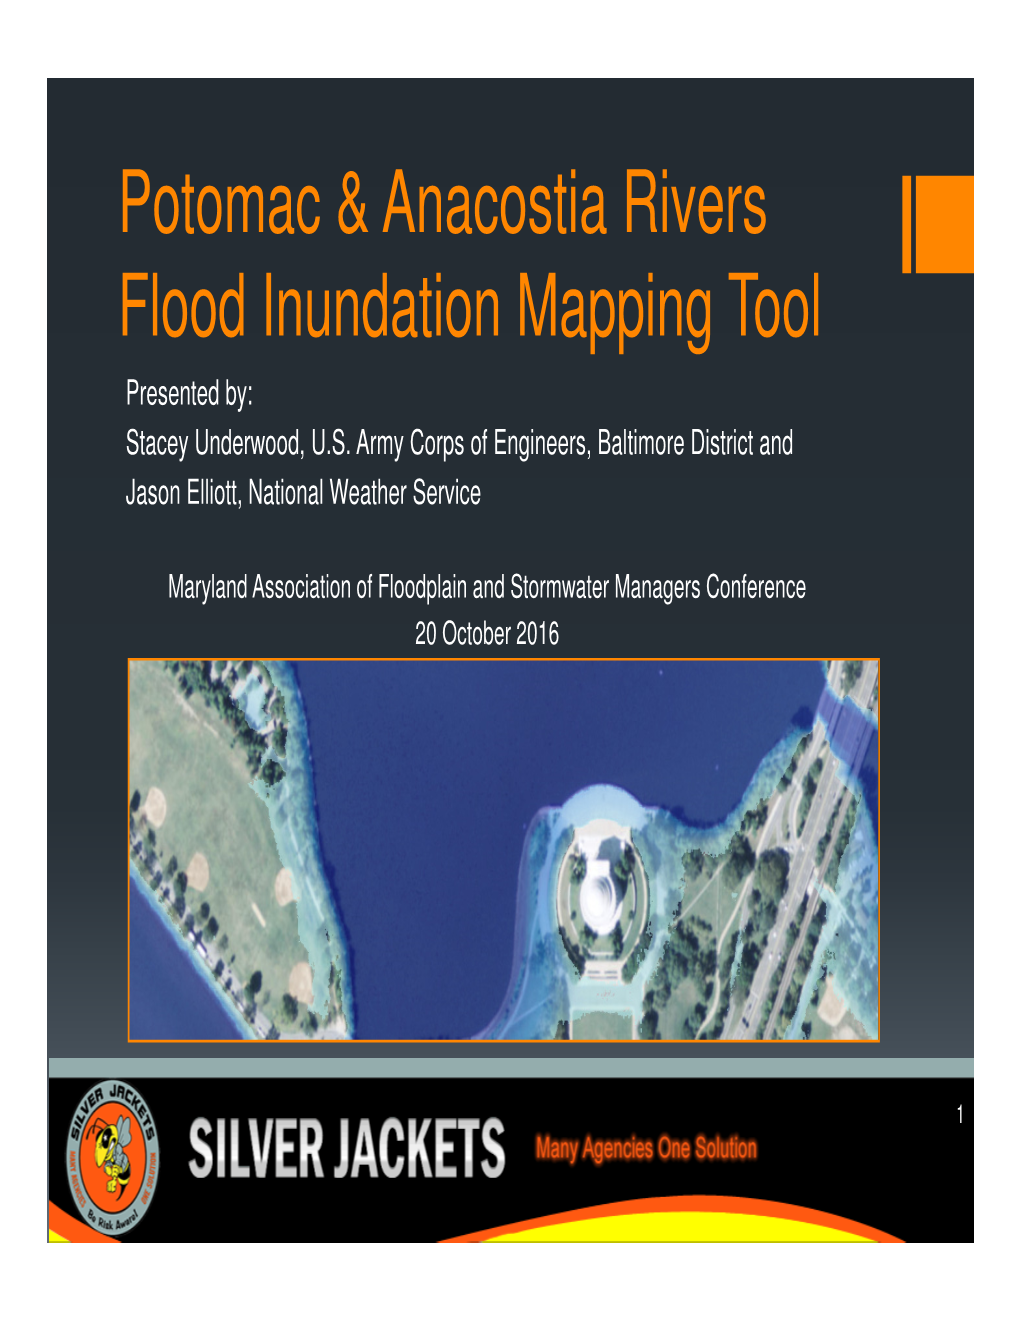 Potomac & Anacostia Rivers Flood Inundation Mapping Tool